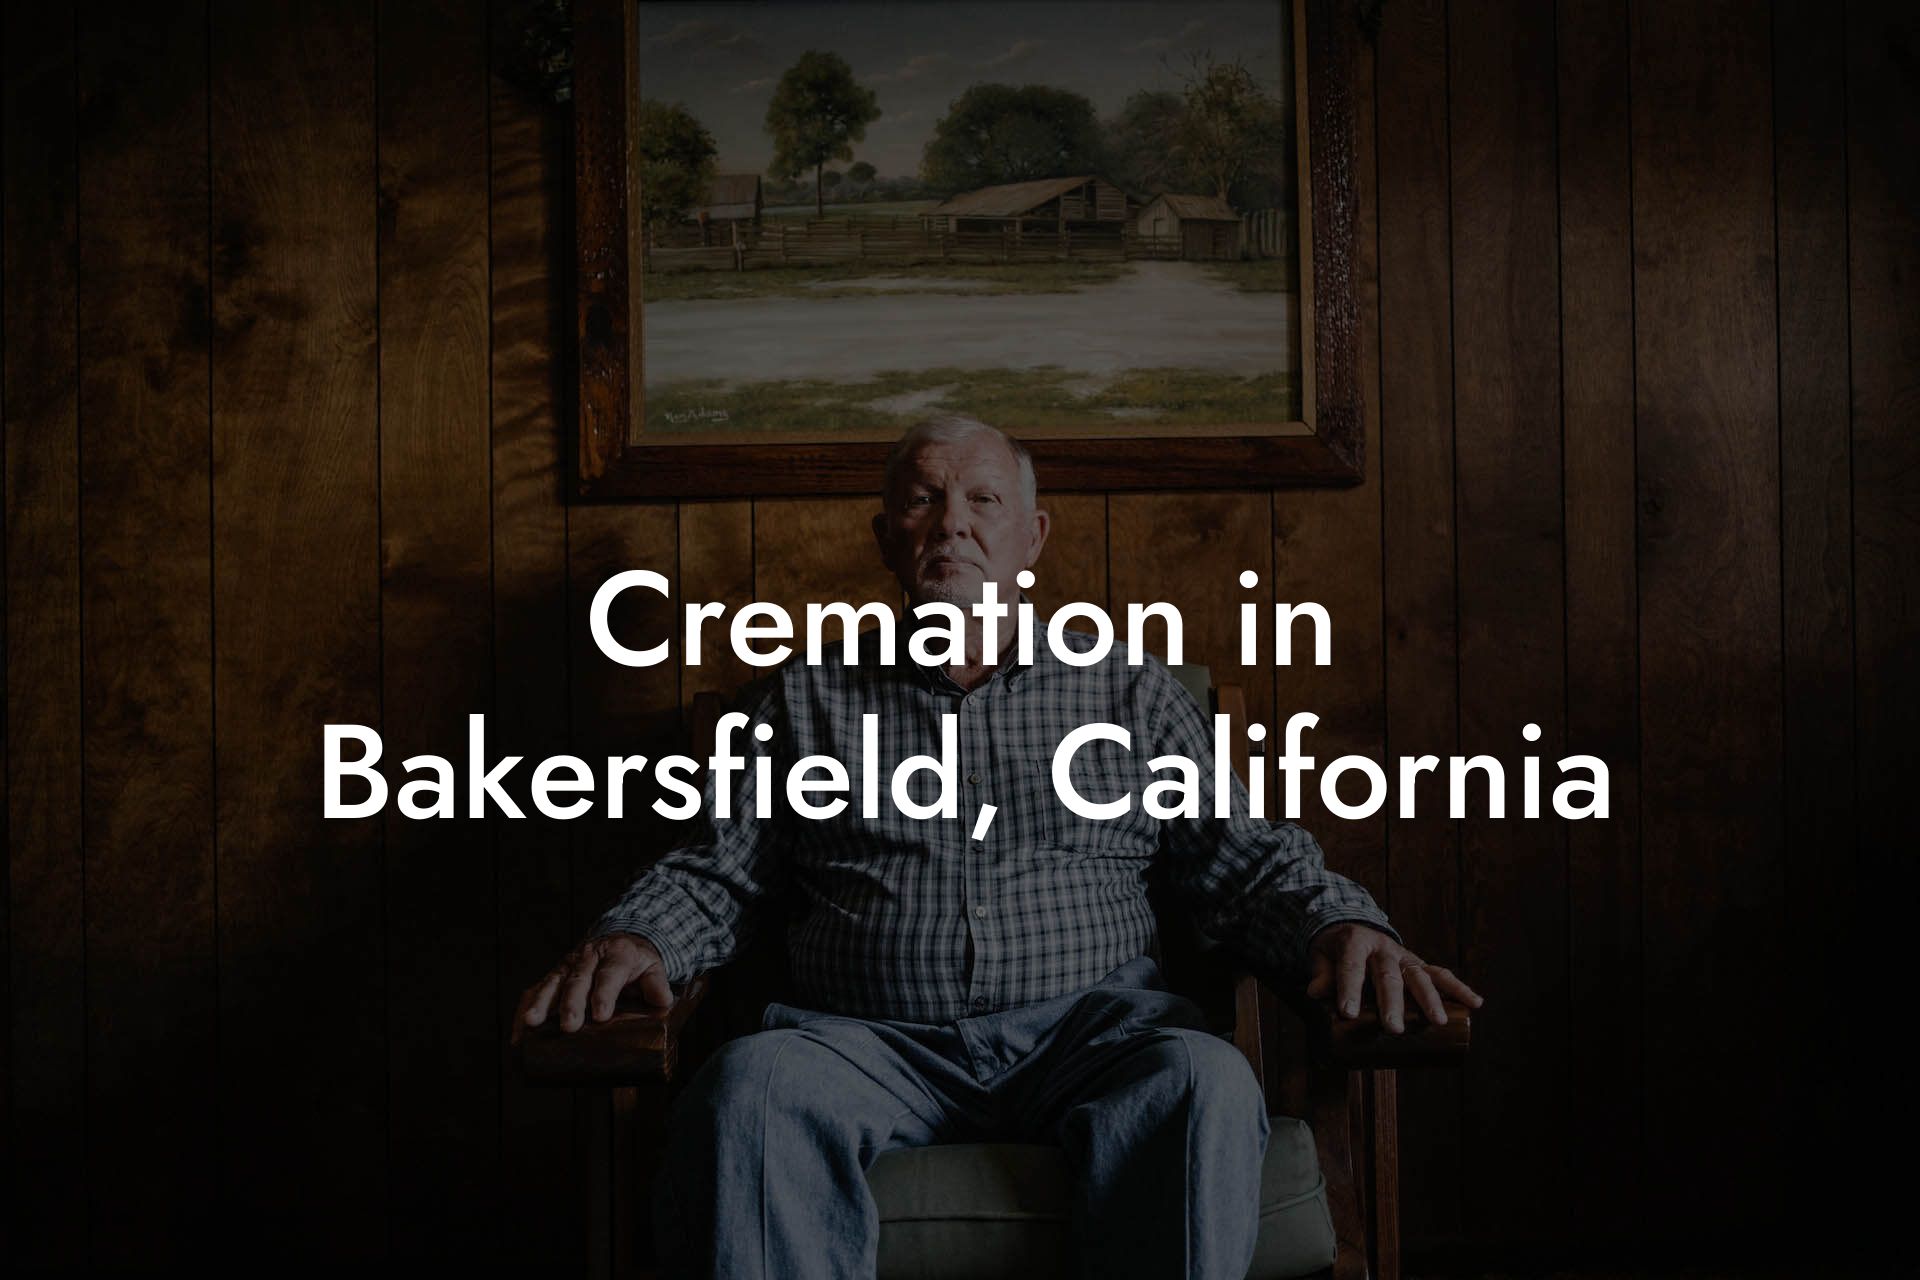 Cremation in Bakersfield, California